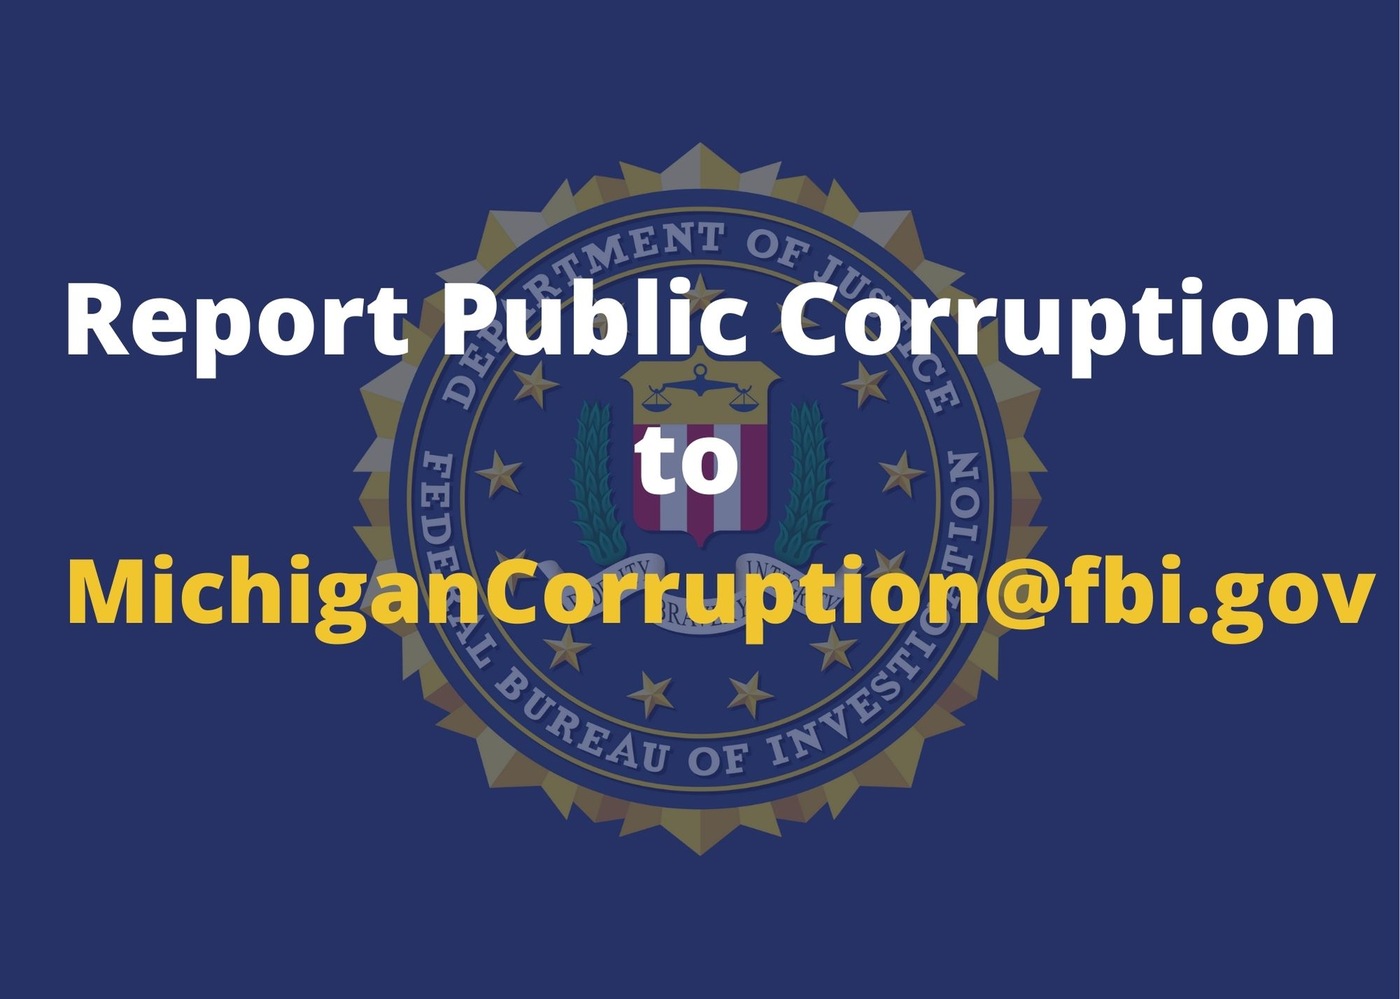 Michigan Corruption E-Mail Address

MichiganCorruption@fbi.gov